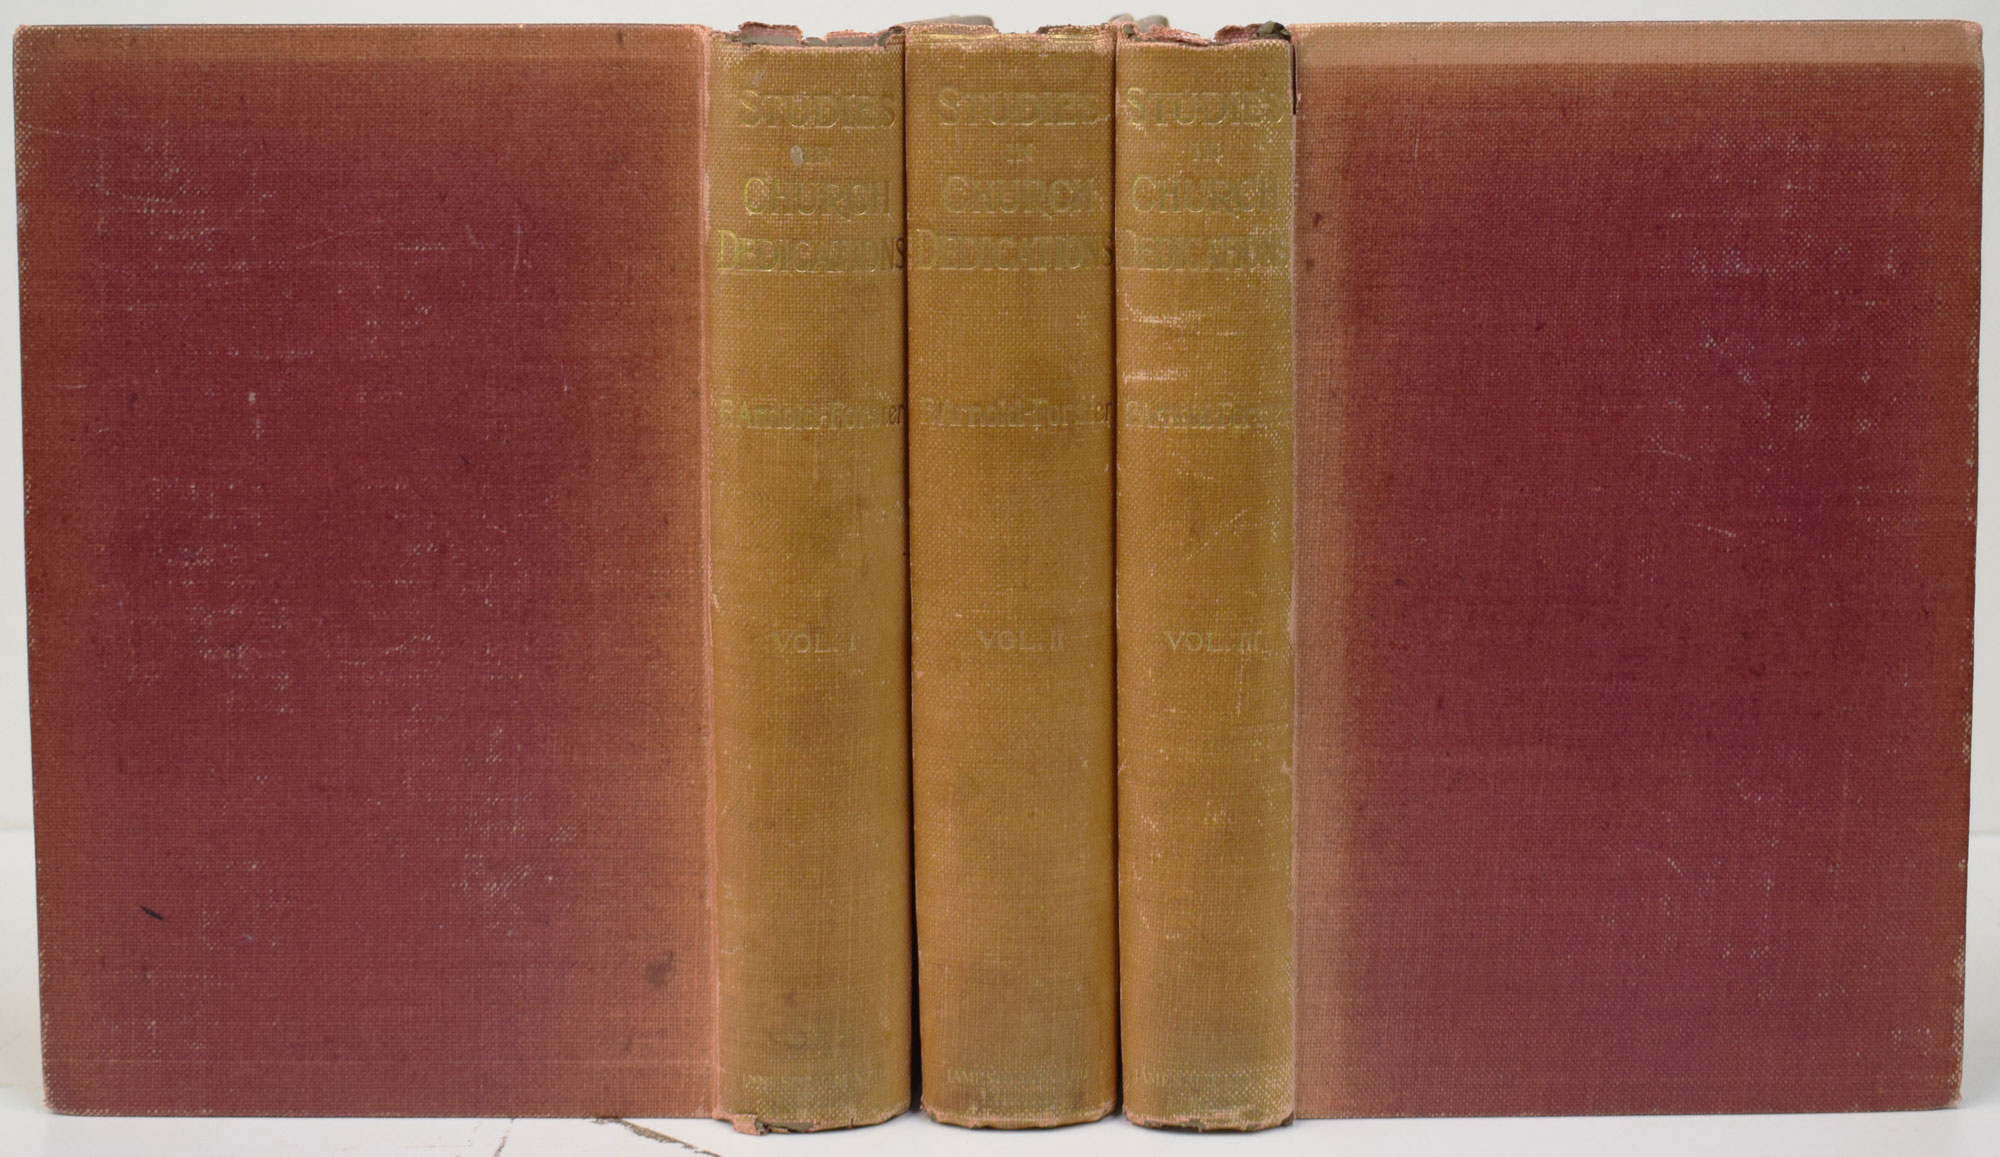 Studies in Church Dedications. Or, England's Patriot Saints. Three volume set.